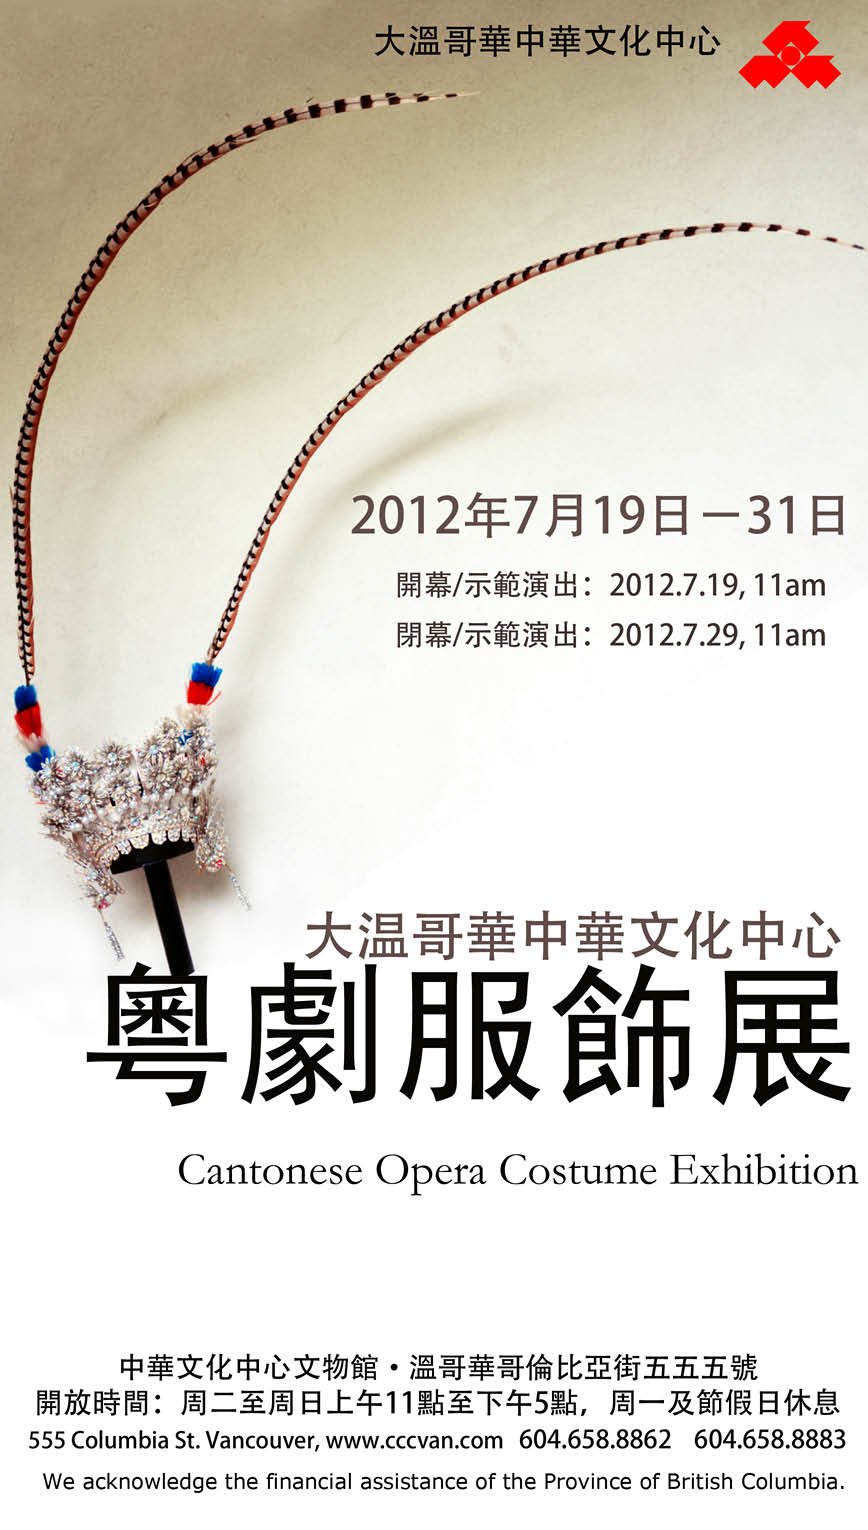 "Chinese Cantonese Opera Costume Exhibition"